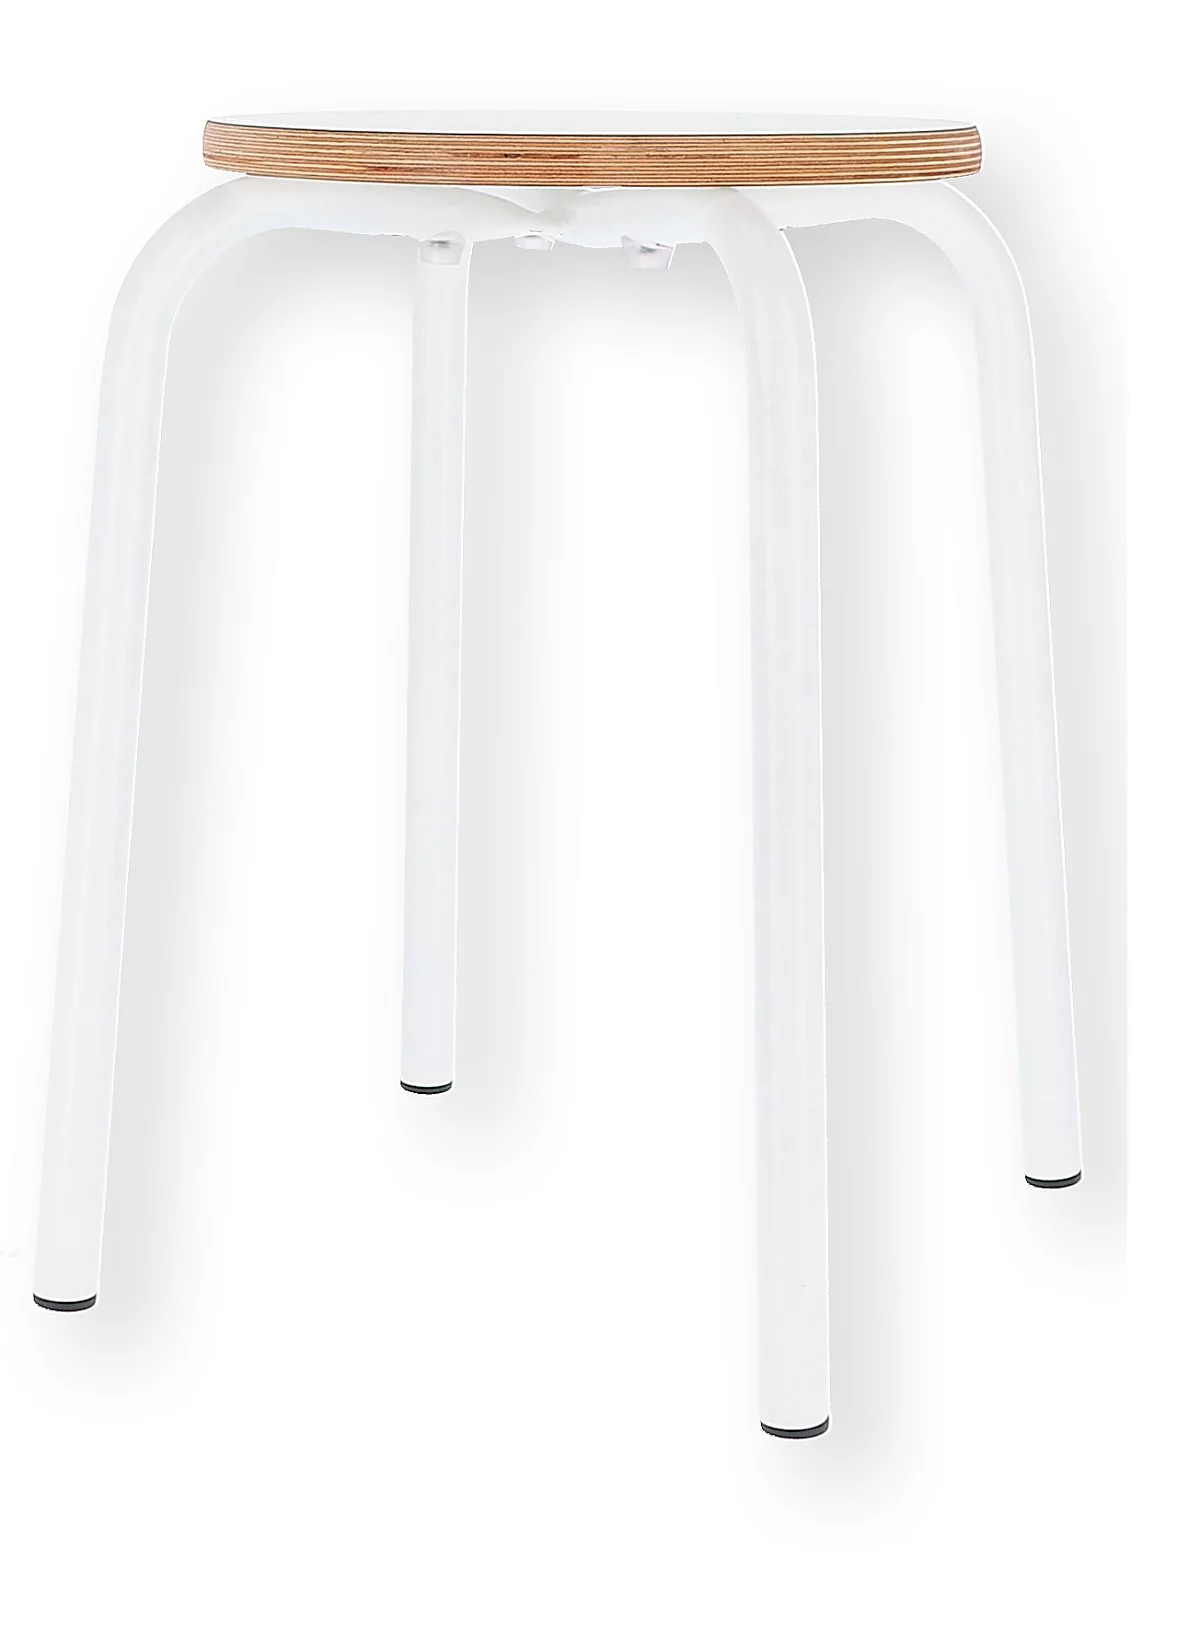 Hocker PARIS, stapelbar, Rundrohrfuß-Gestell, Ø 330 x T 330 x H 460 mm, weiß/weiß